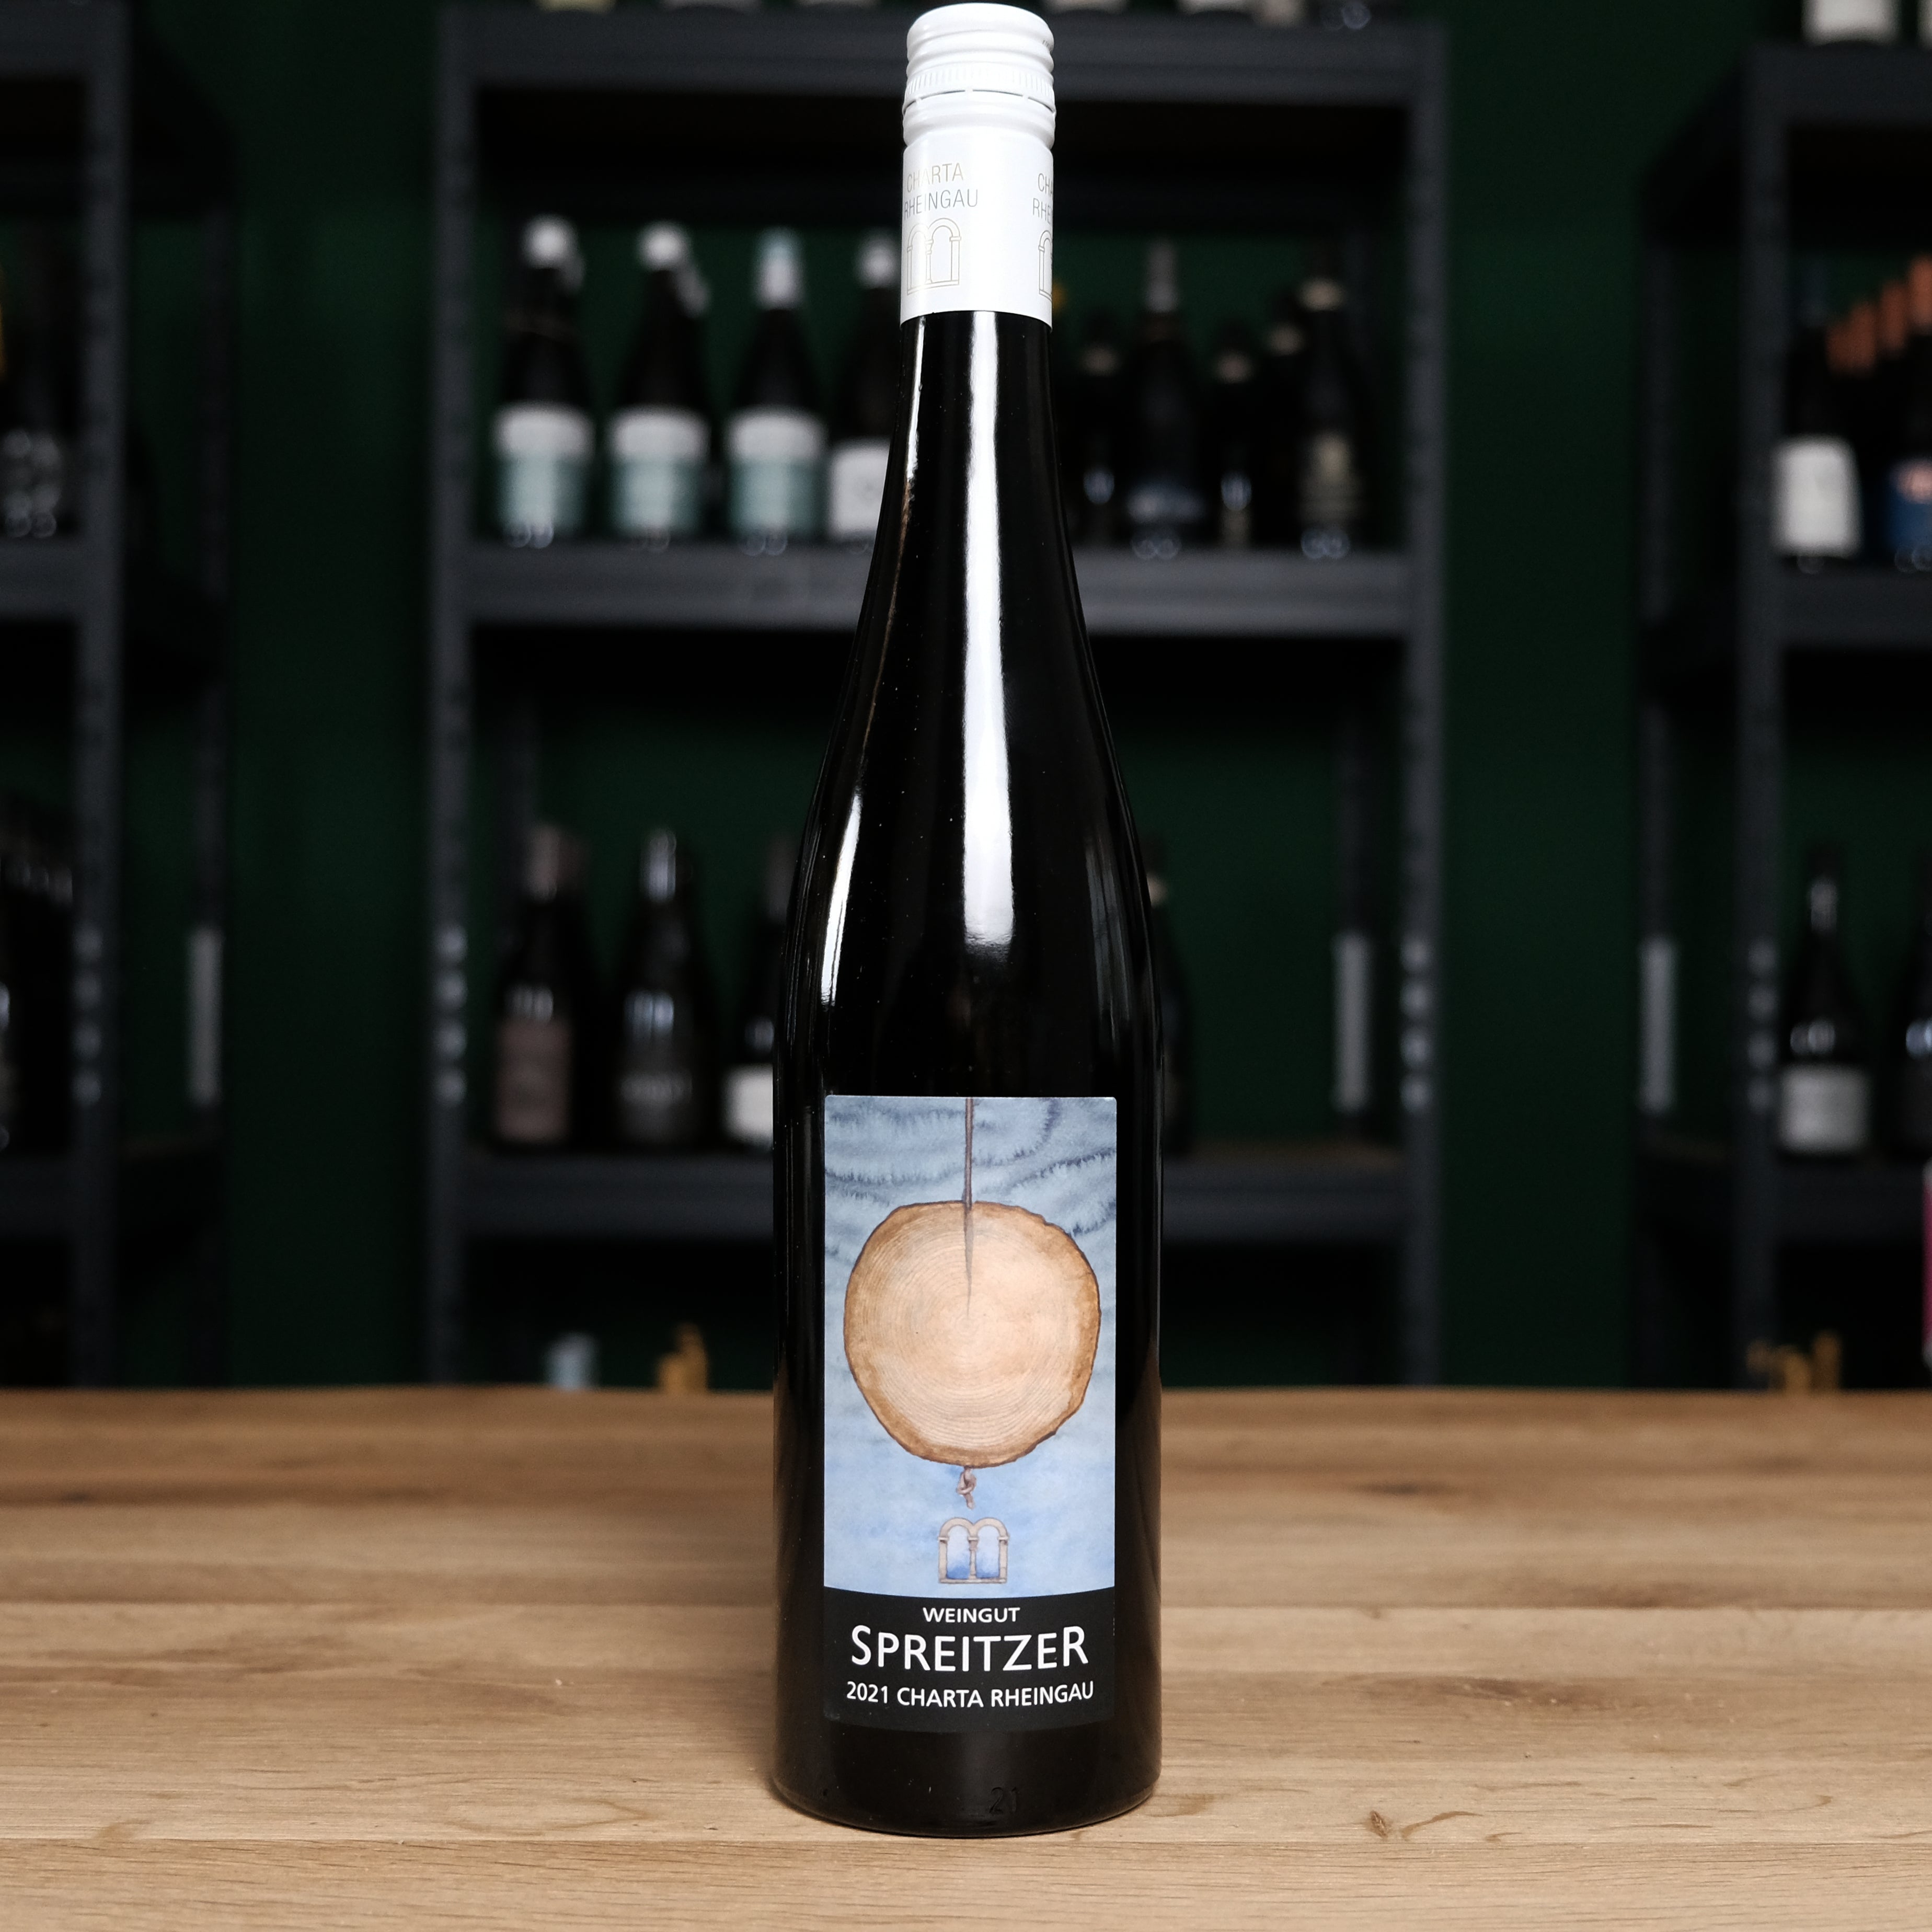 VDP Riesling Ursprung Wein – I Spreitzer CHARTA 2021 Rheingau: Weingut